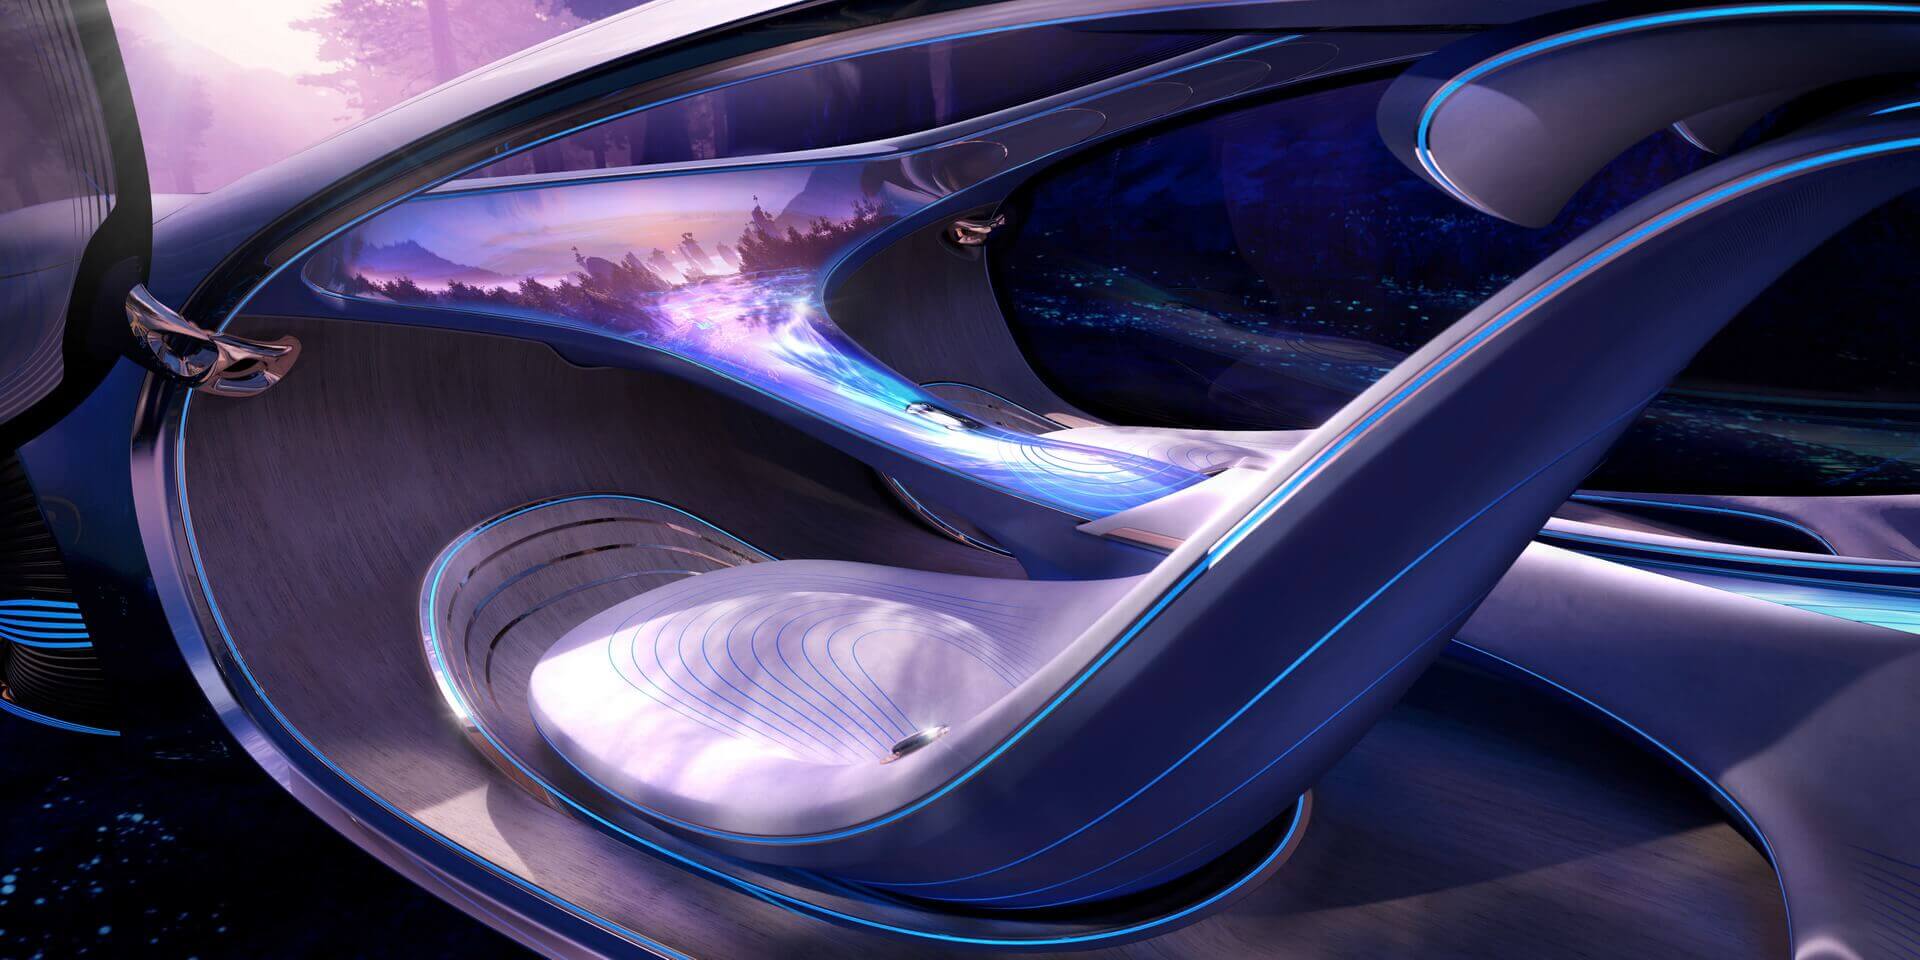 Mercedes показал концепт электрокара по мотивам "Аватара": видео